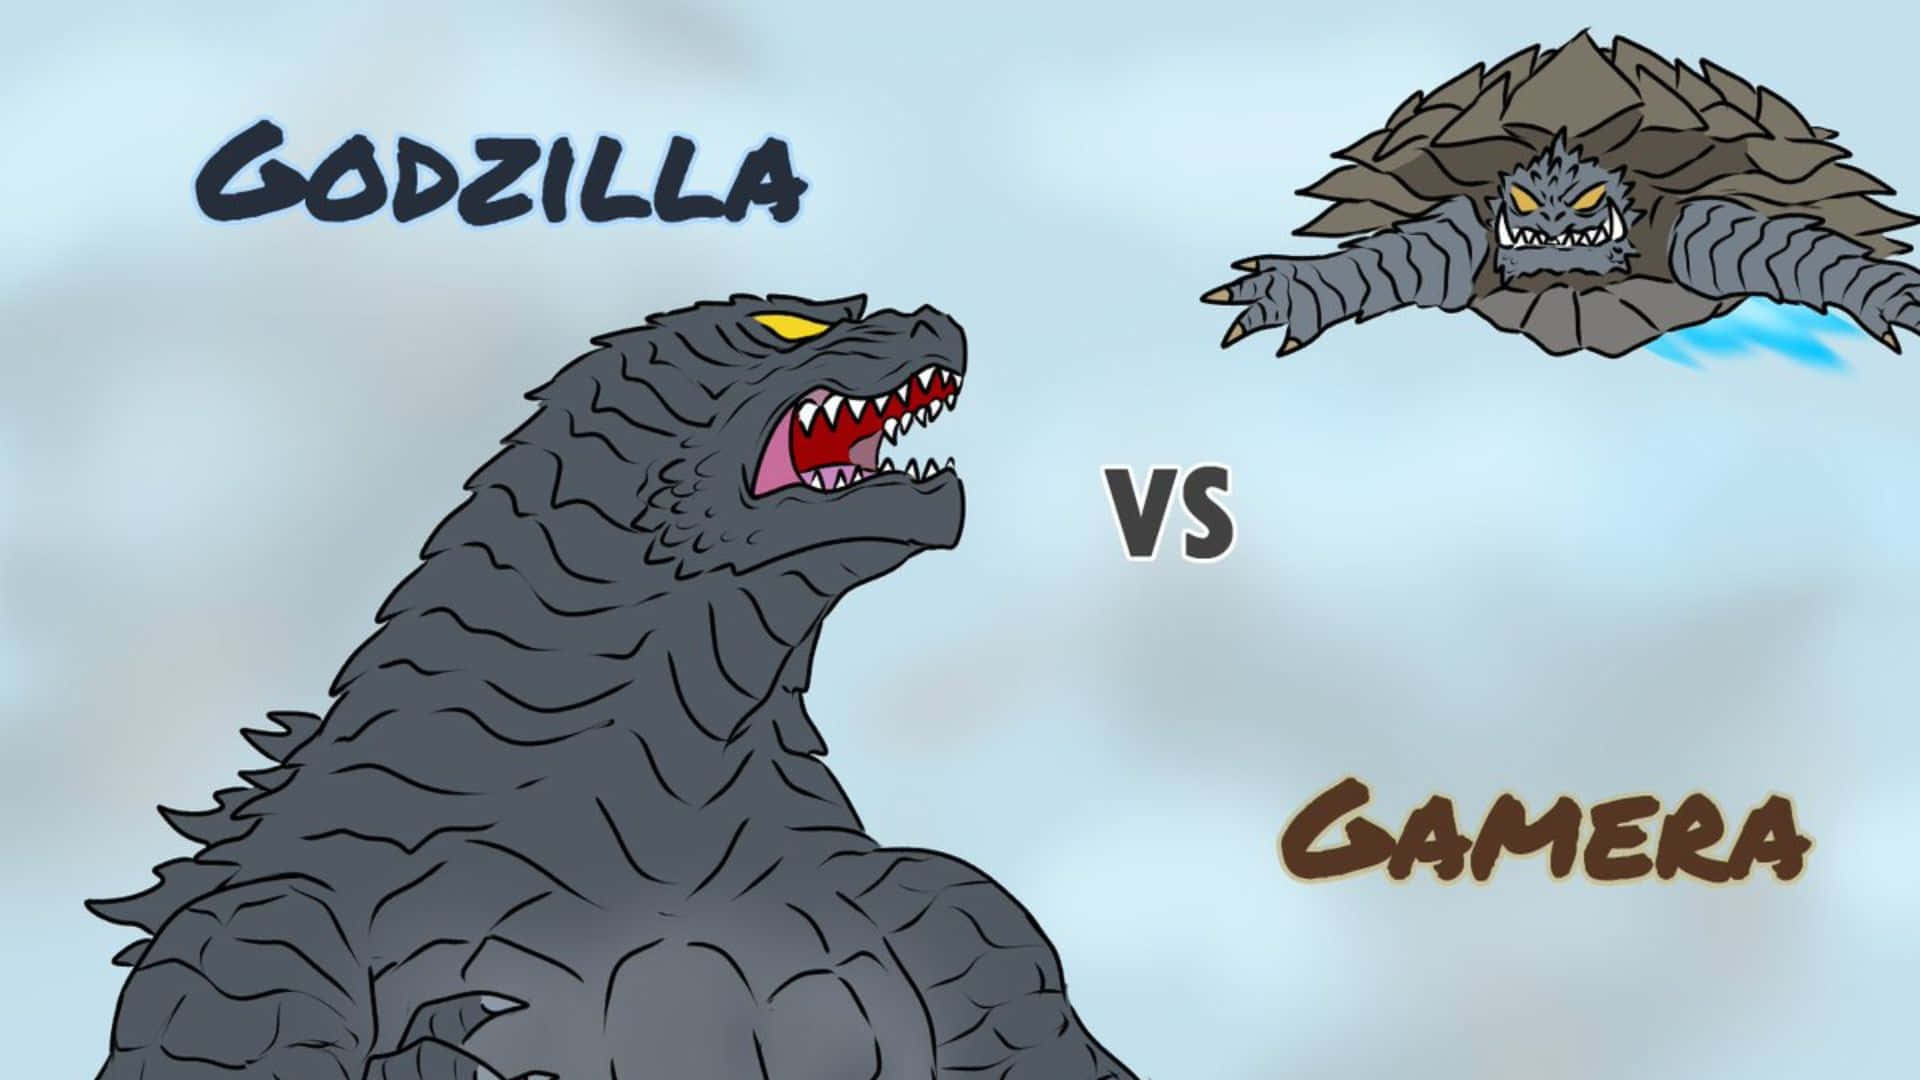 Epic showdown between Godzilla and Gamera Wallpaper